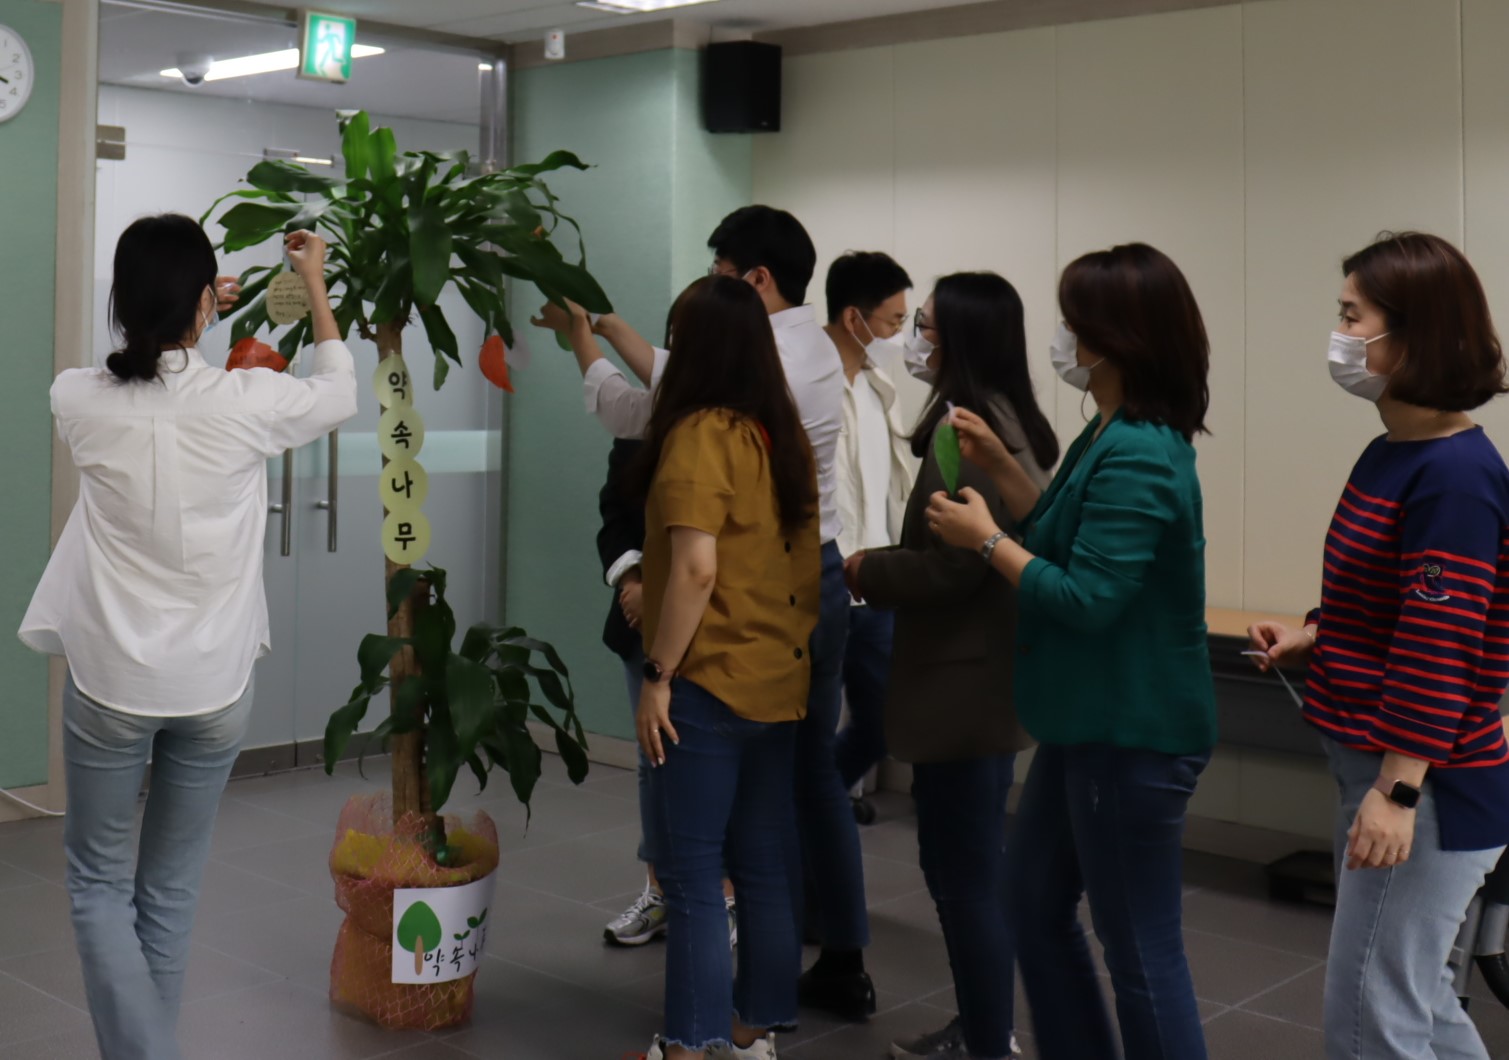 ESG-친환경경영 선포식(21.05.07.) 행사사진